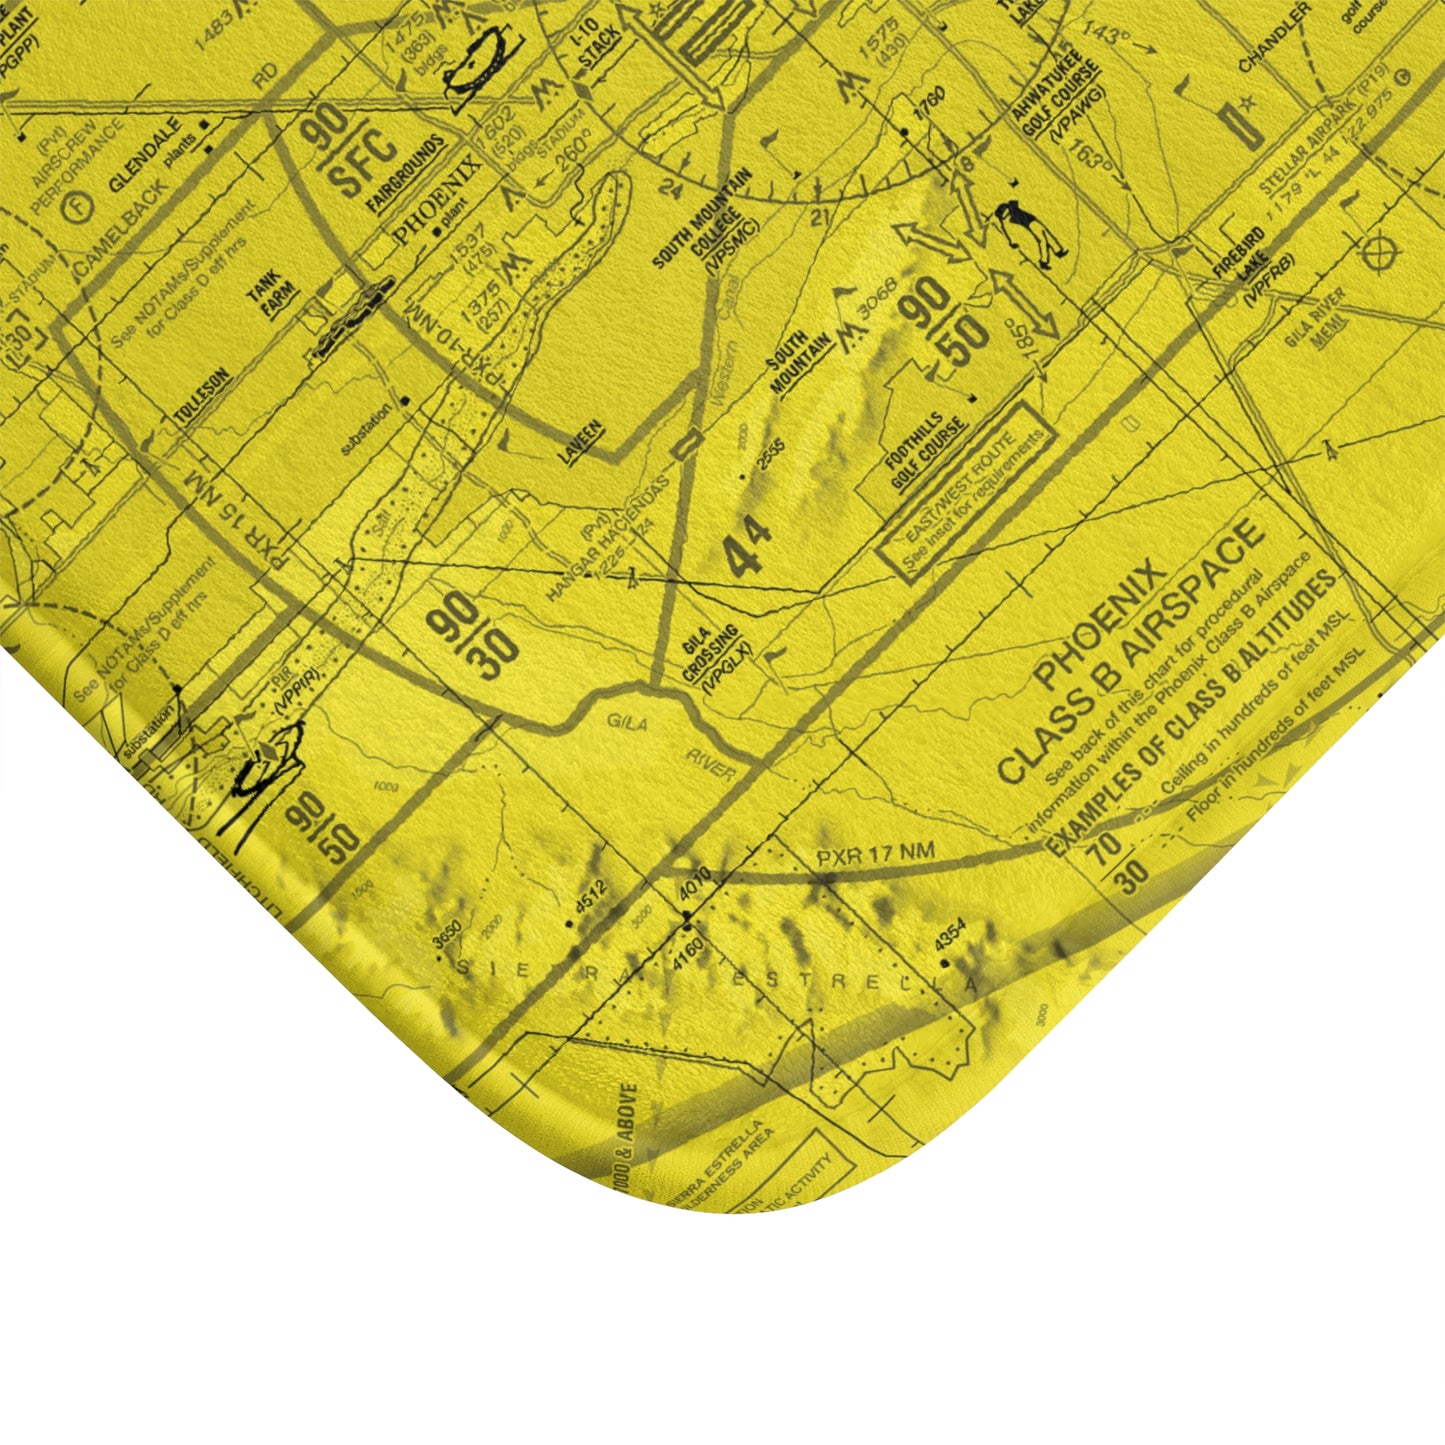 Phoenix TAC Chart bath mat (yellow)